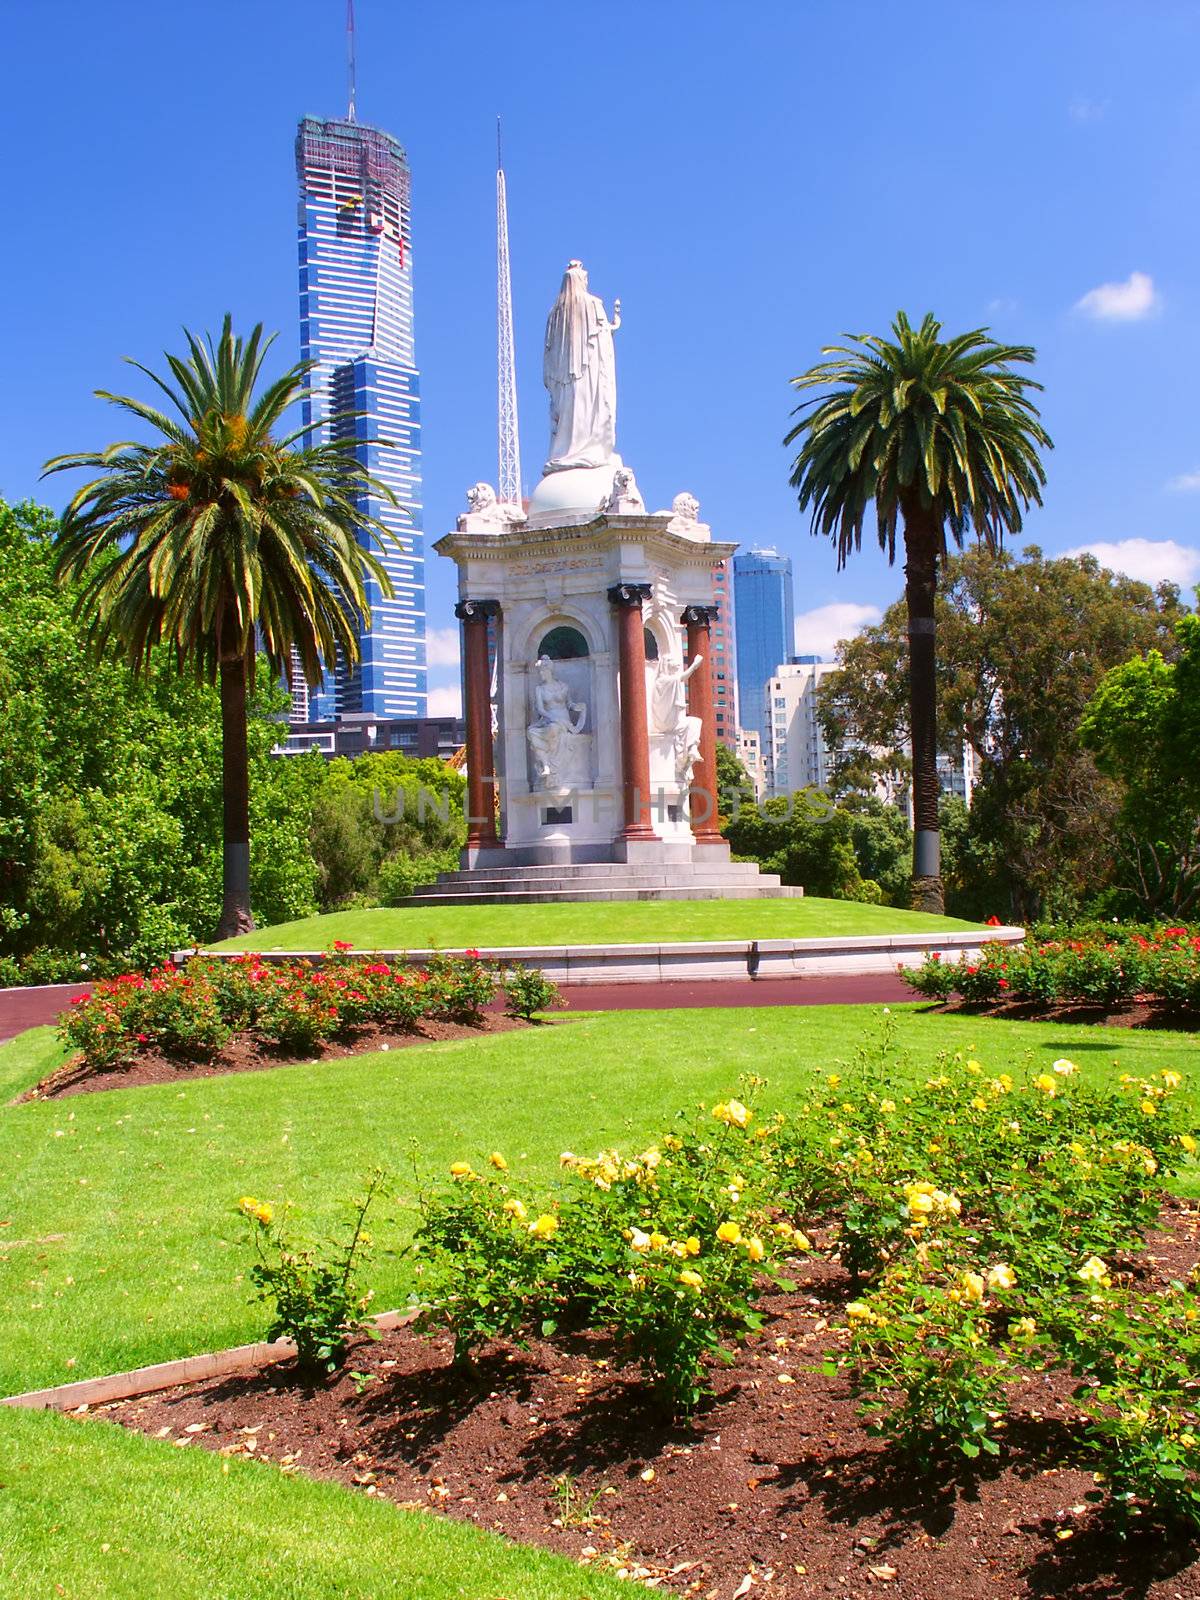 Queen Victoria Memorial Melbourne Australia by Wirepec